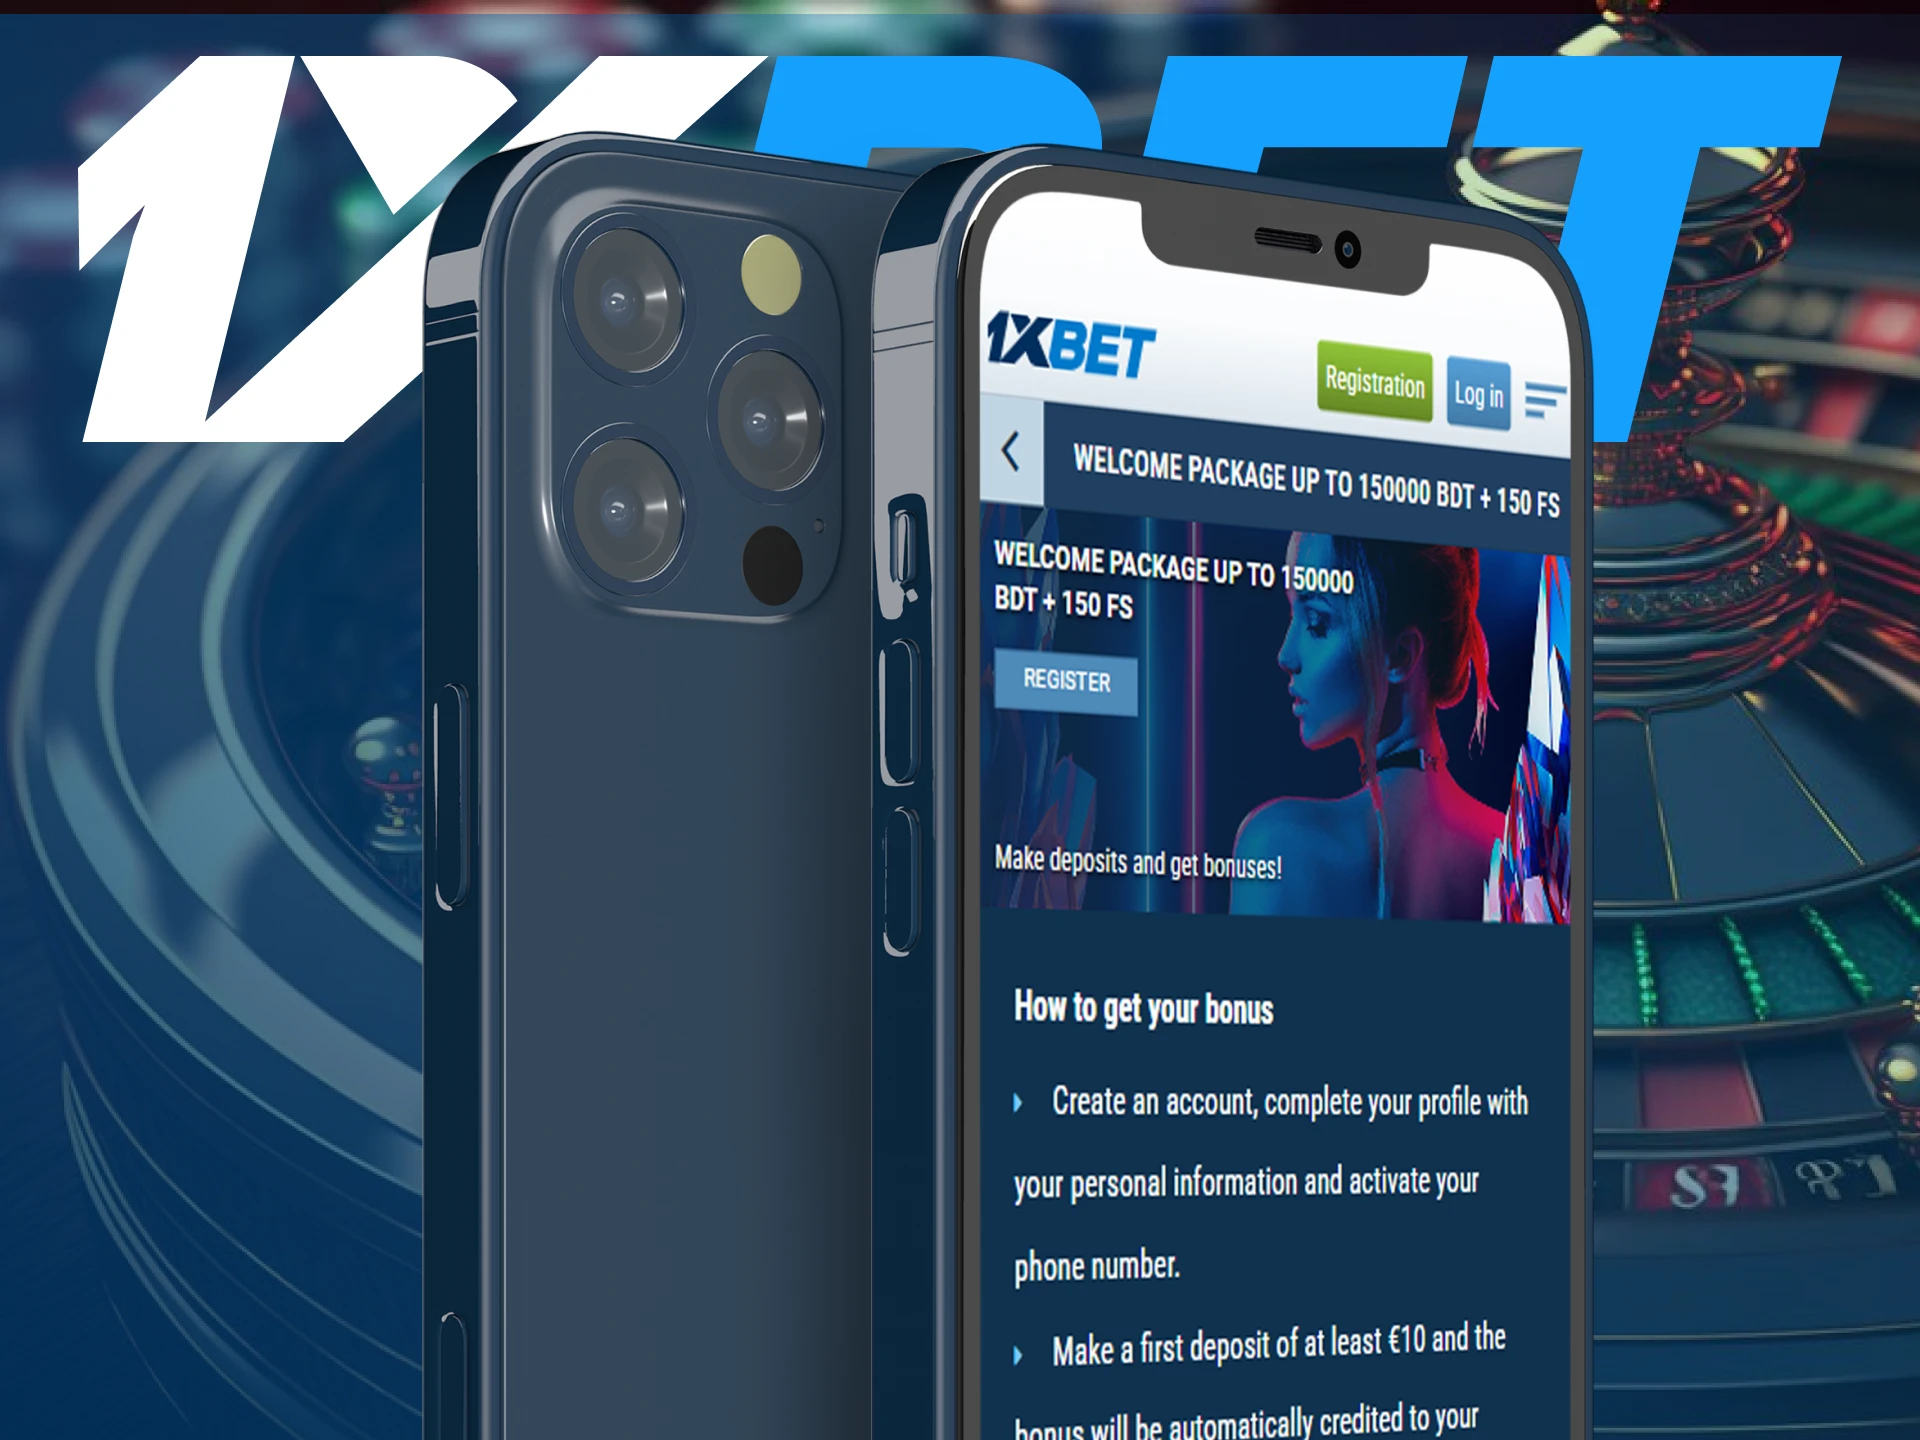 Users of the 1xBet app get a casino bonus.